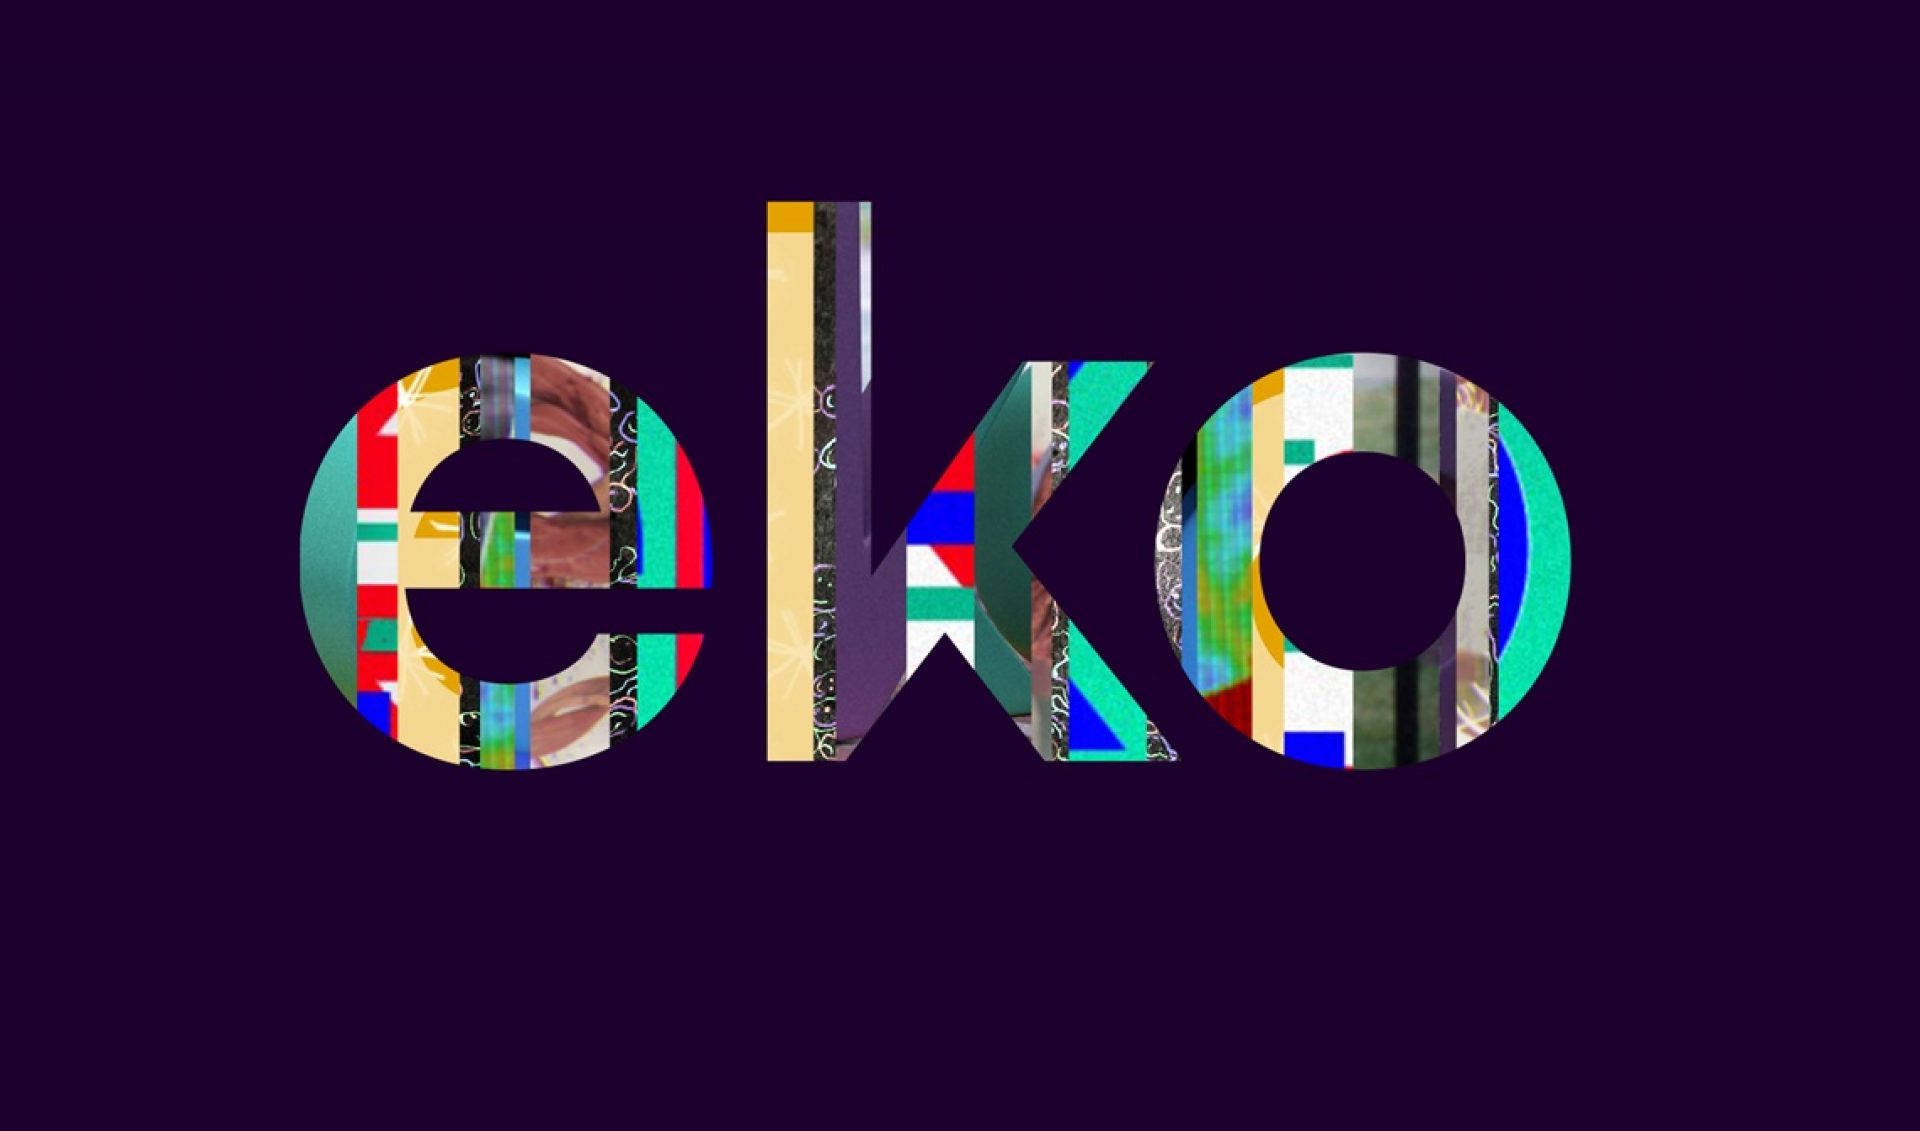 Interactive Digital Media Studio Interlude Rebrands To Become Eko